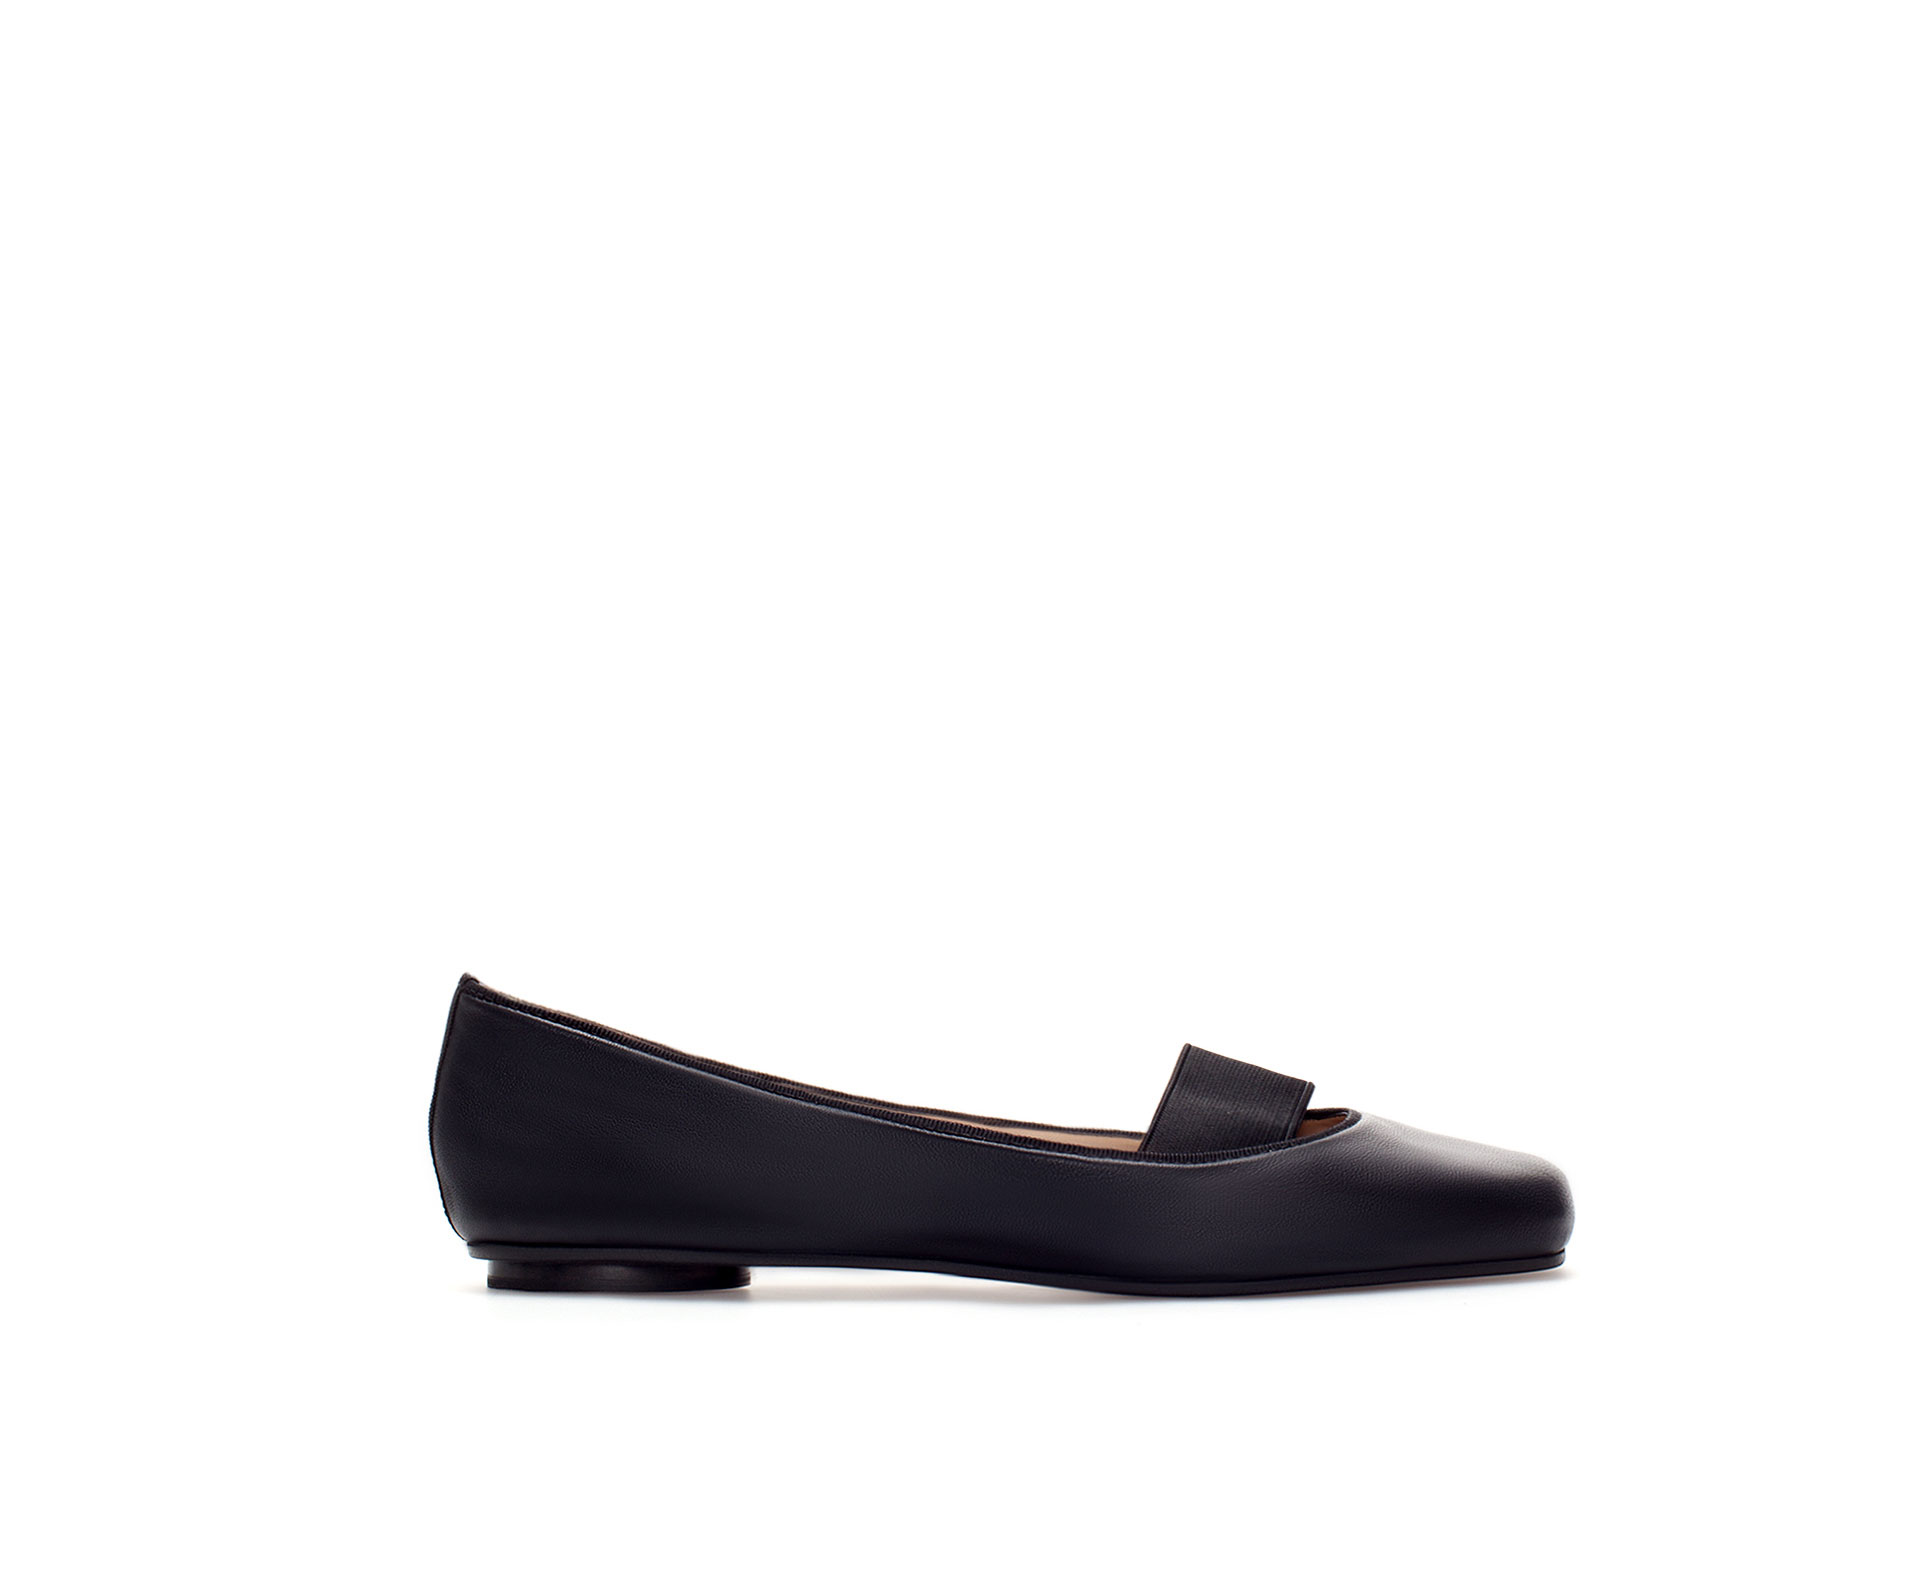 Zara Leather Ballerina Shoes in Black | Lyst